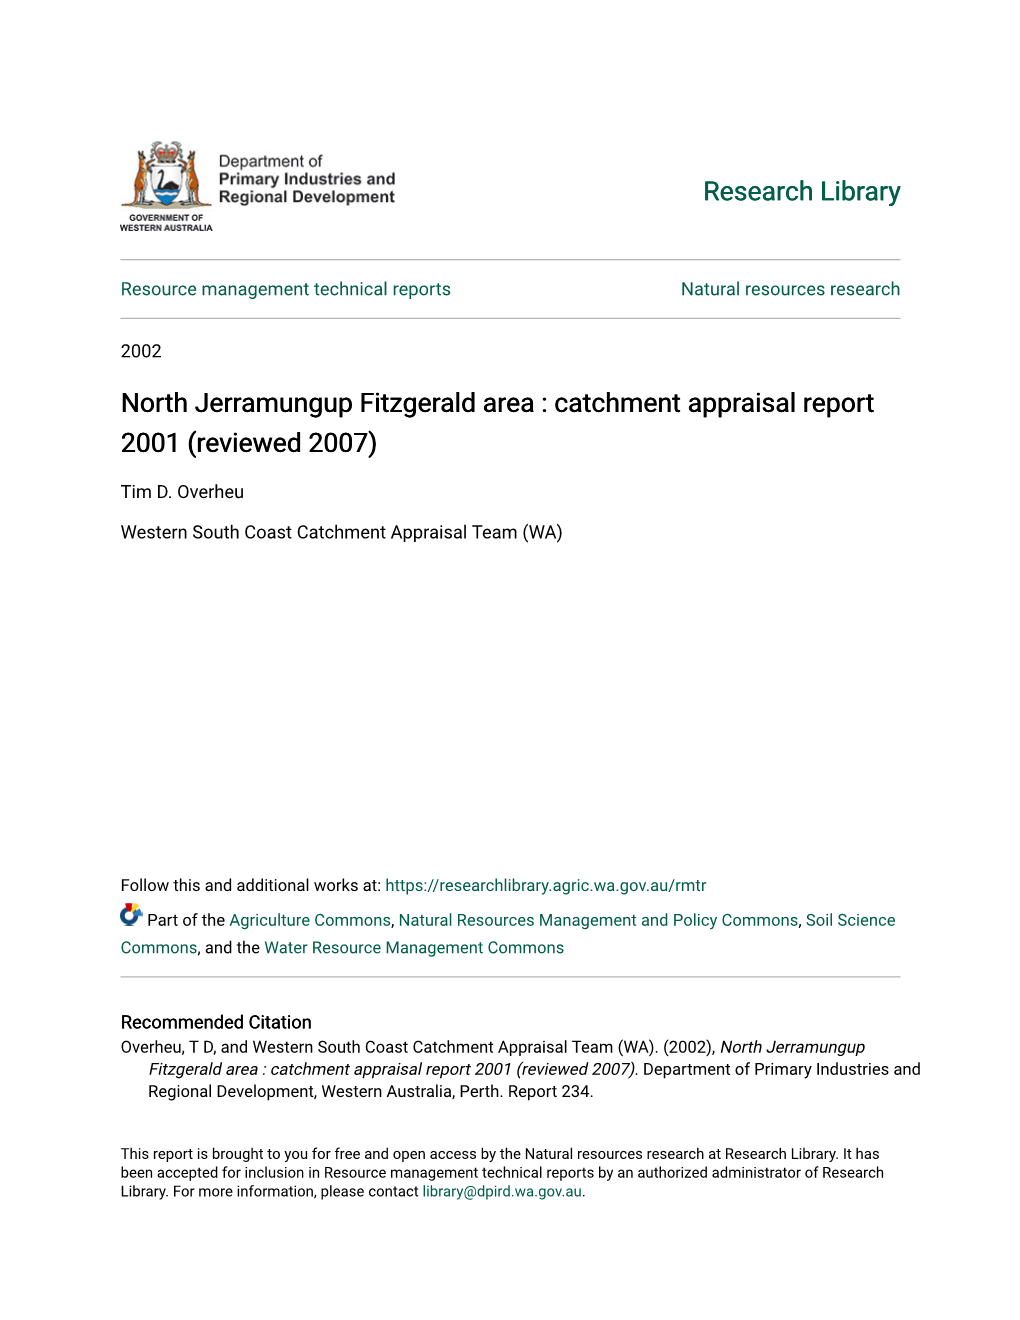 North Jerramungup Fitzgerald Area : Catchment Appraisal Report 2001 (Reviewed 2007)